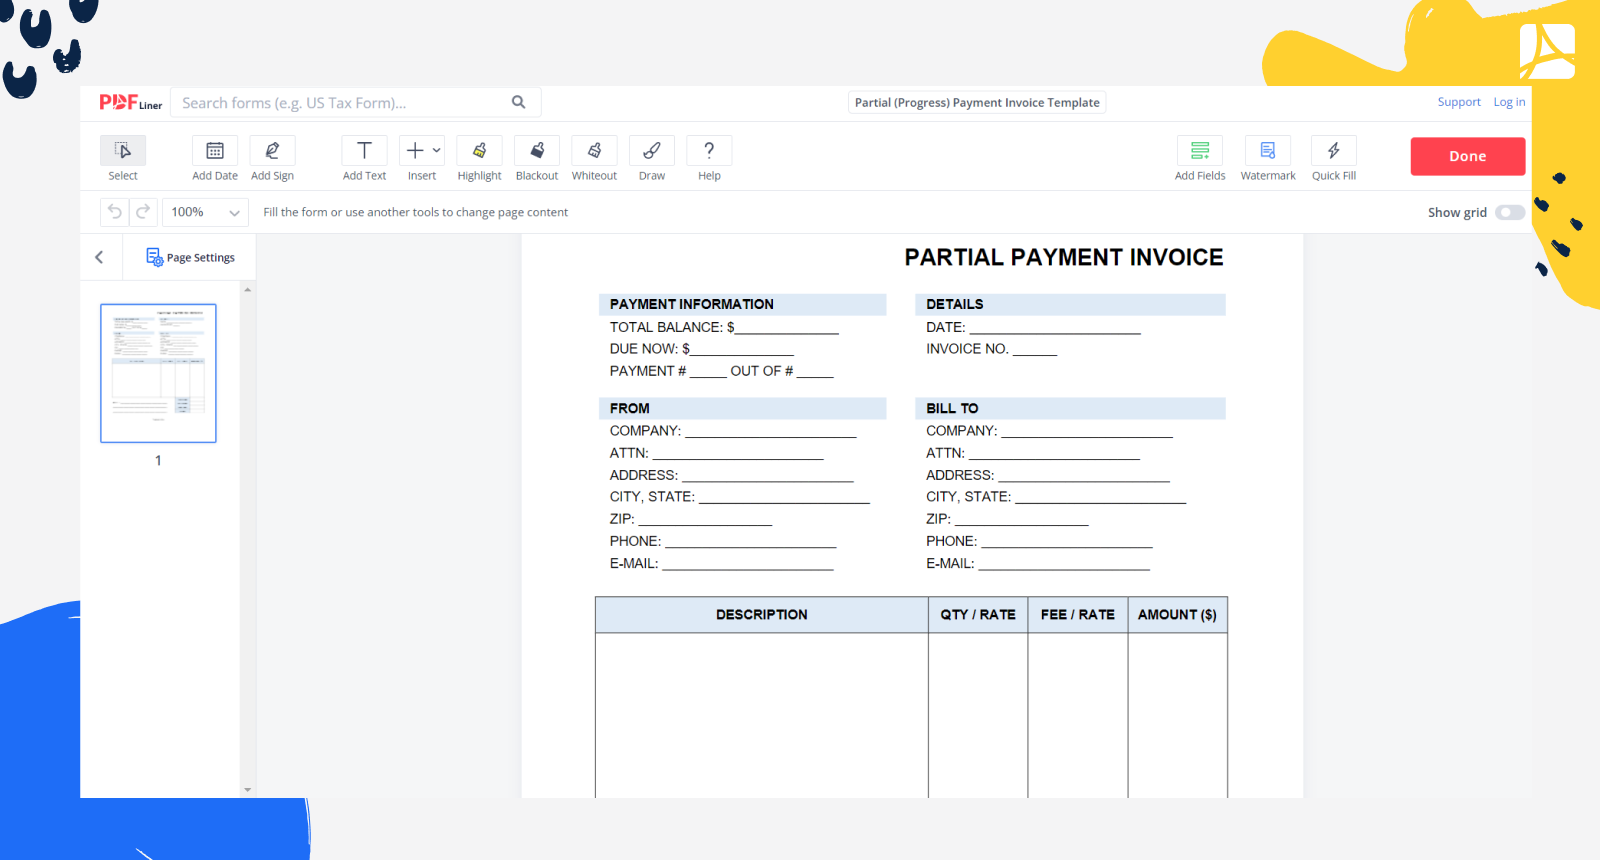 Partial (Progress) Payment Invoice Template Form Screenshot